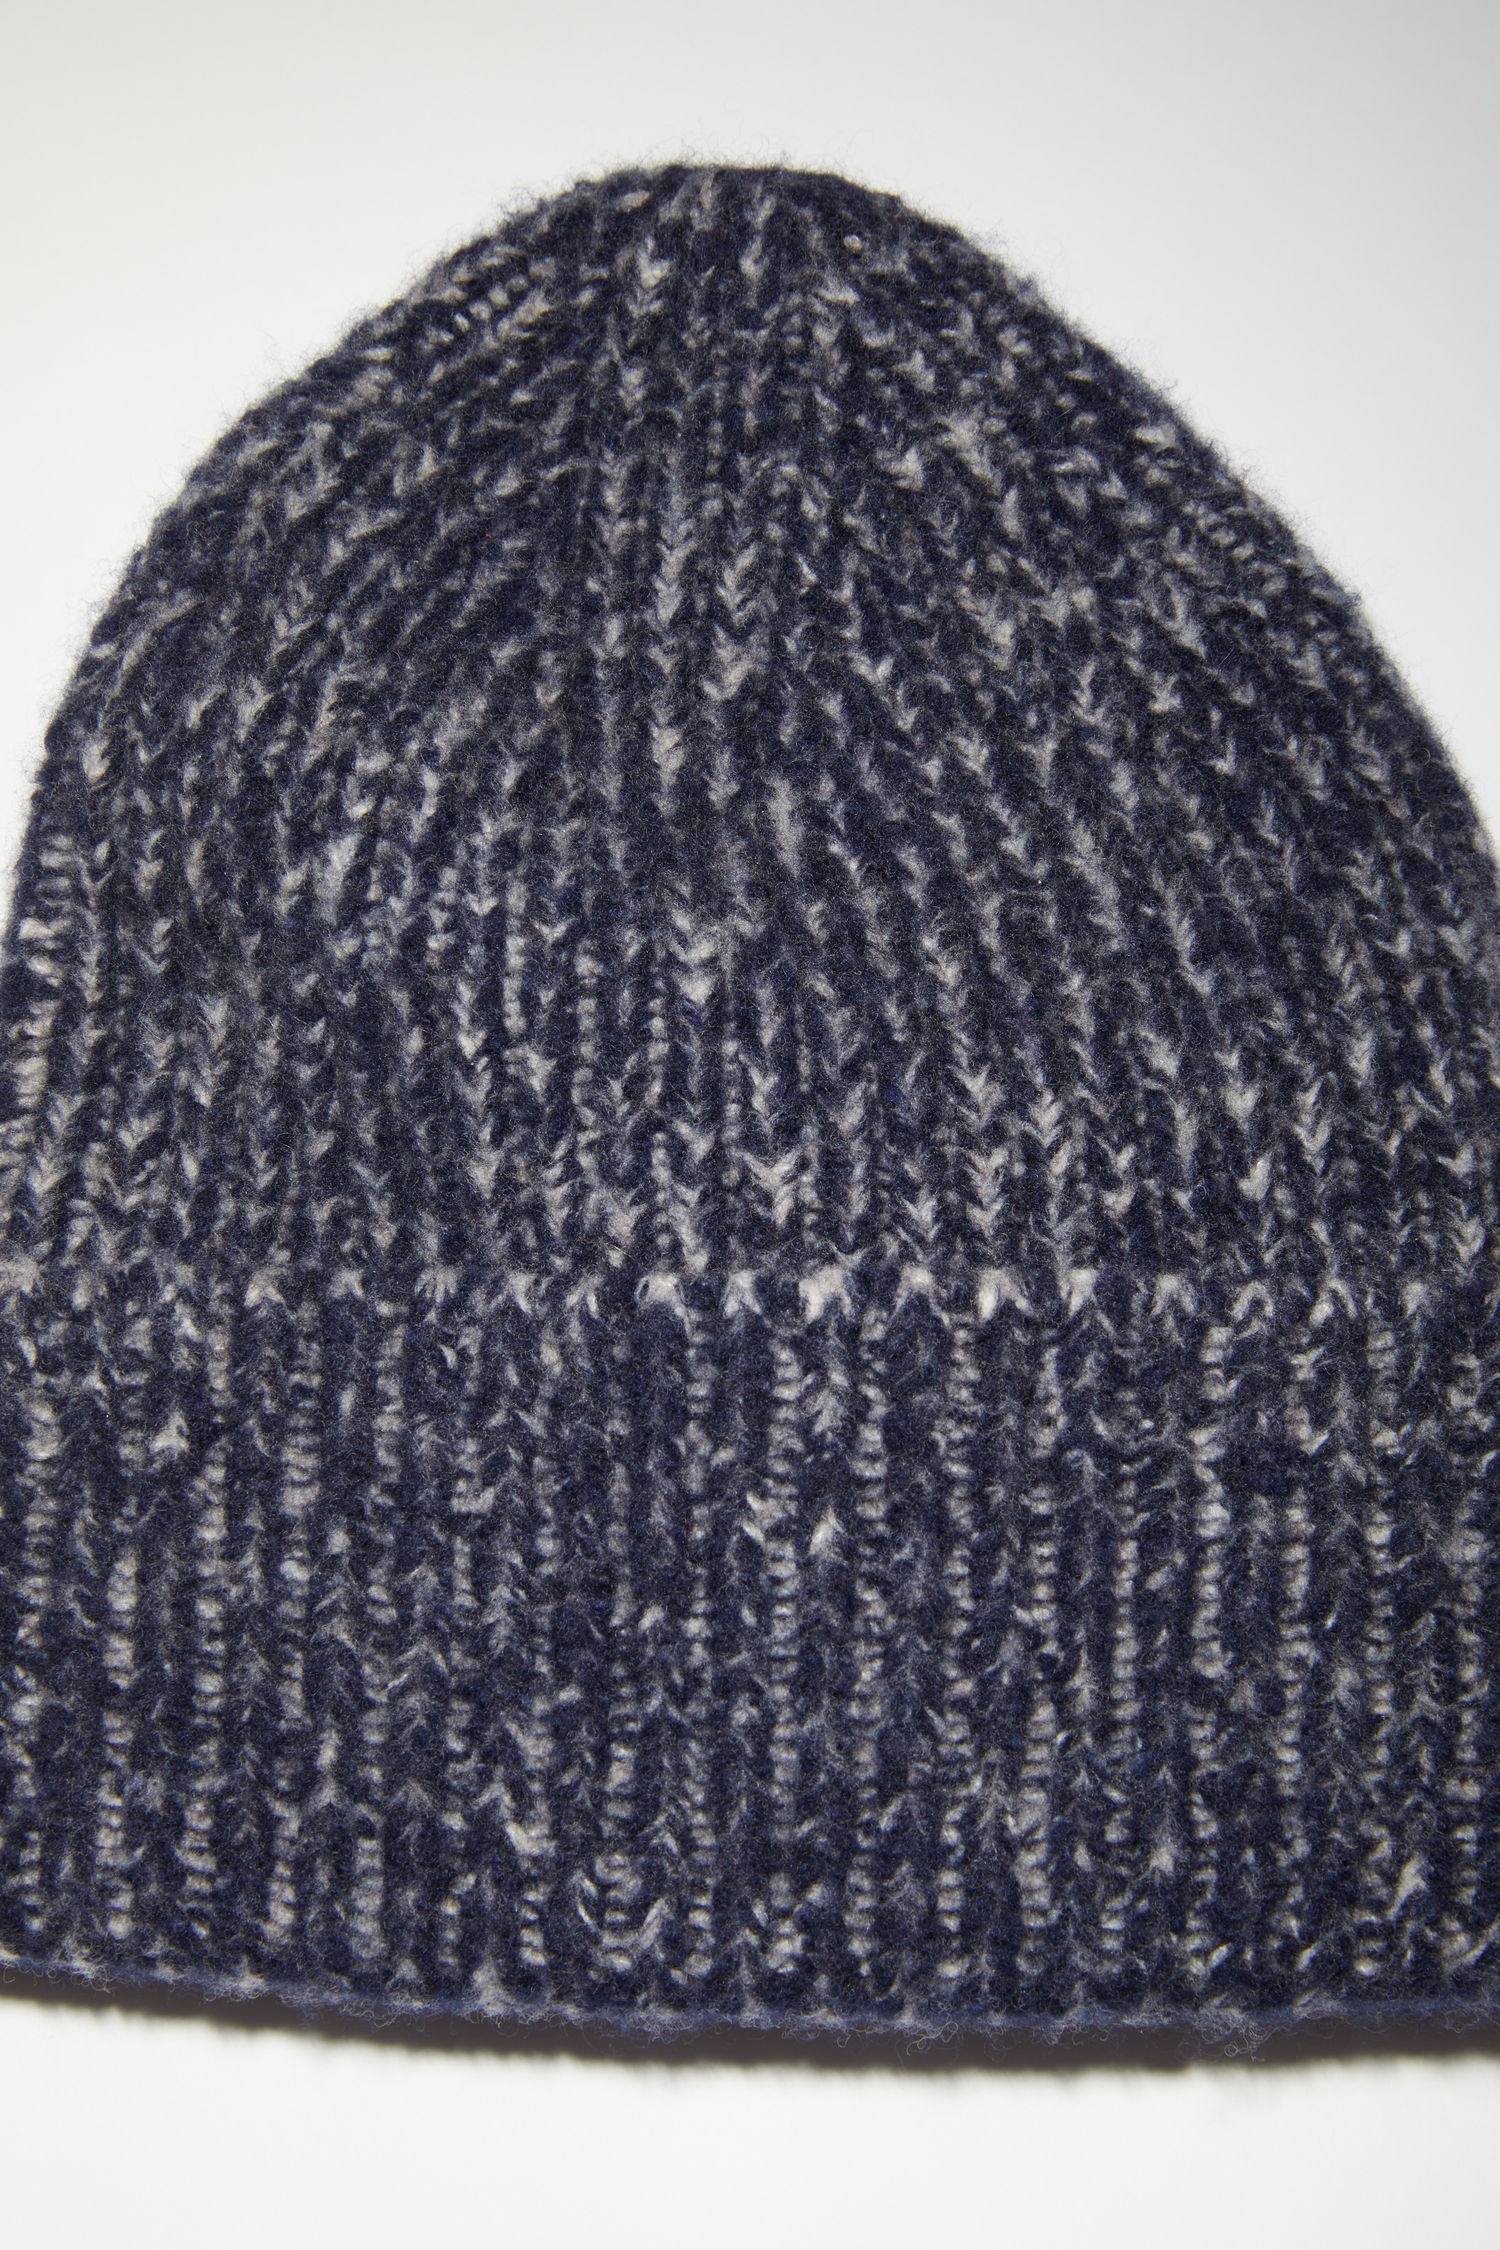 Ribbed beanie hat - Navy/Grey - 4